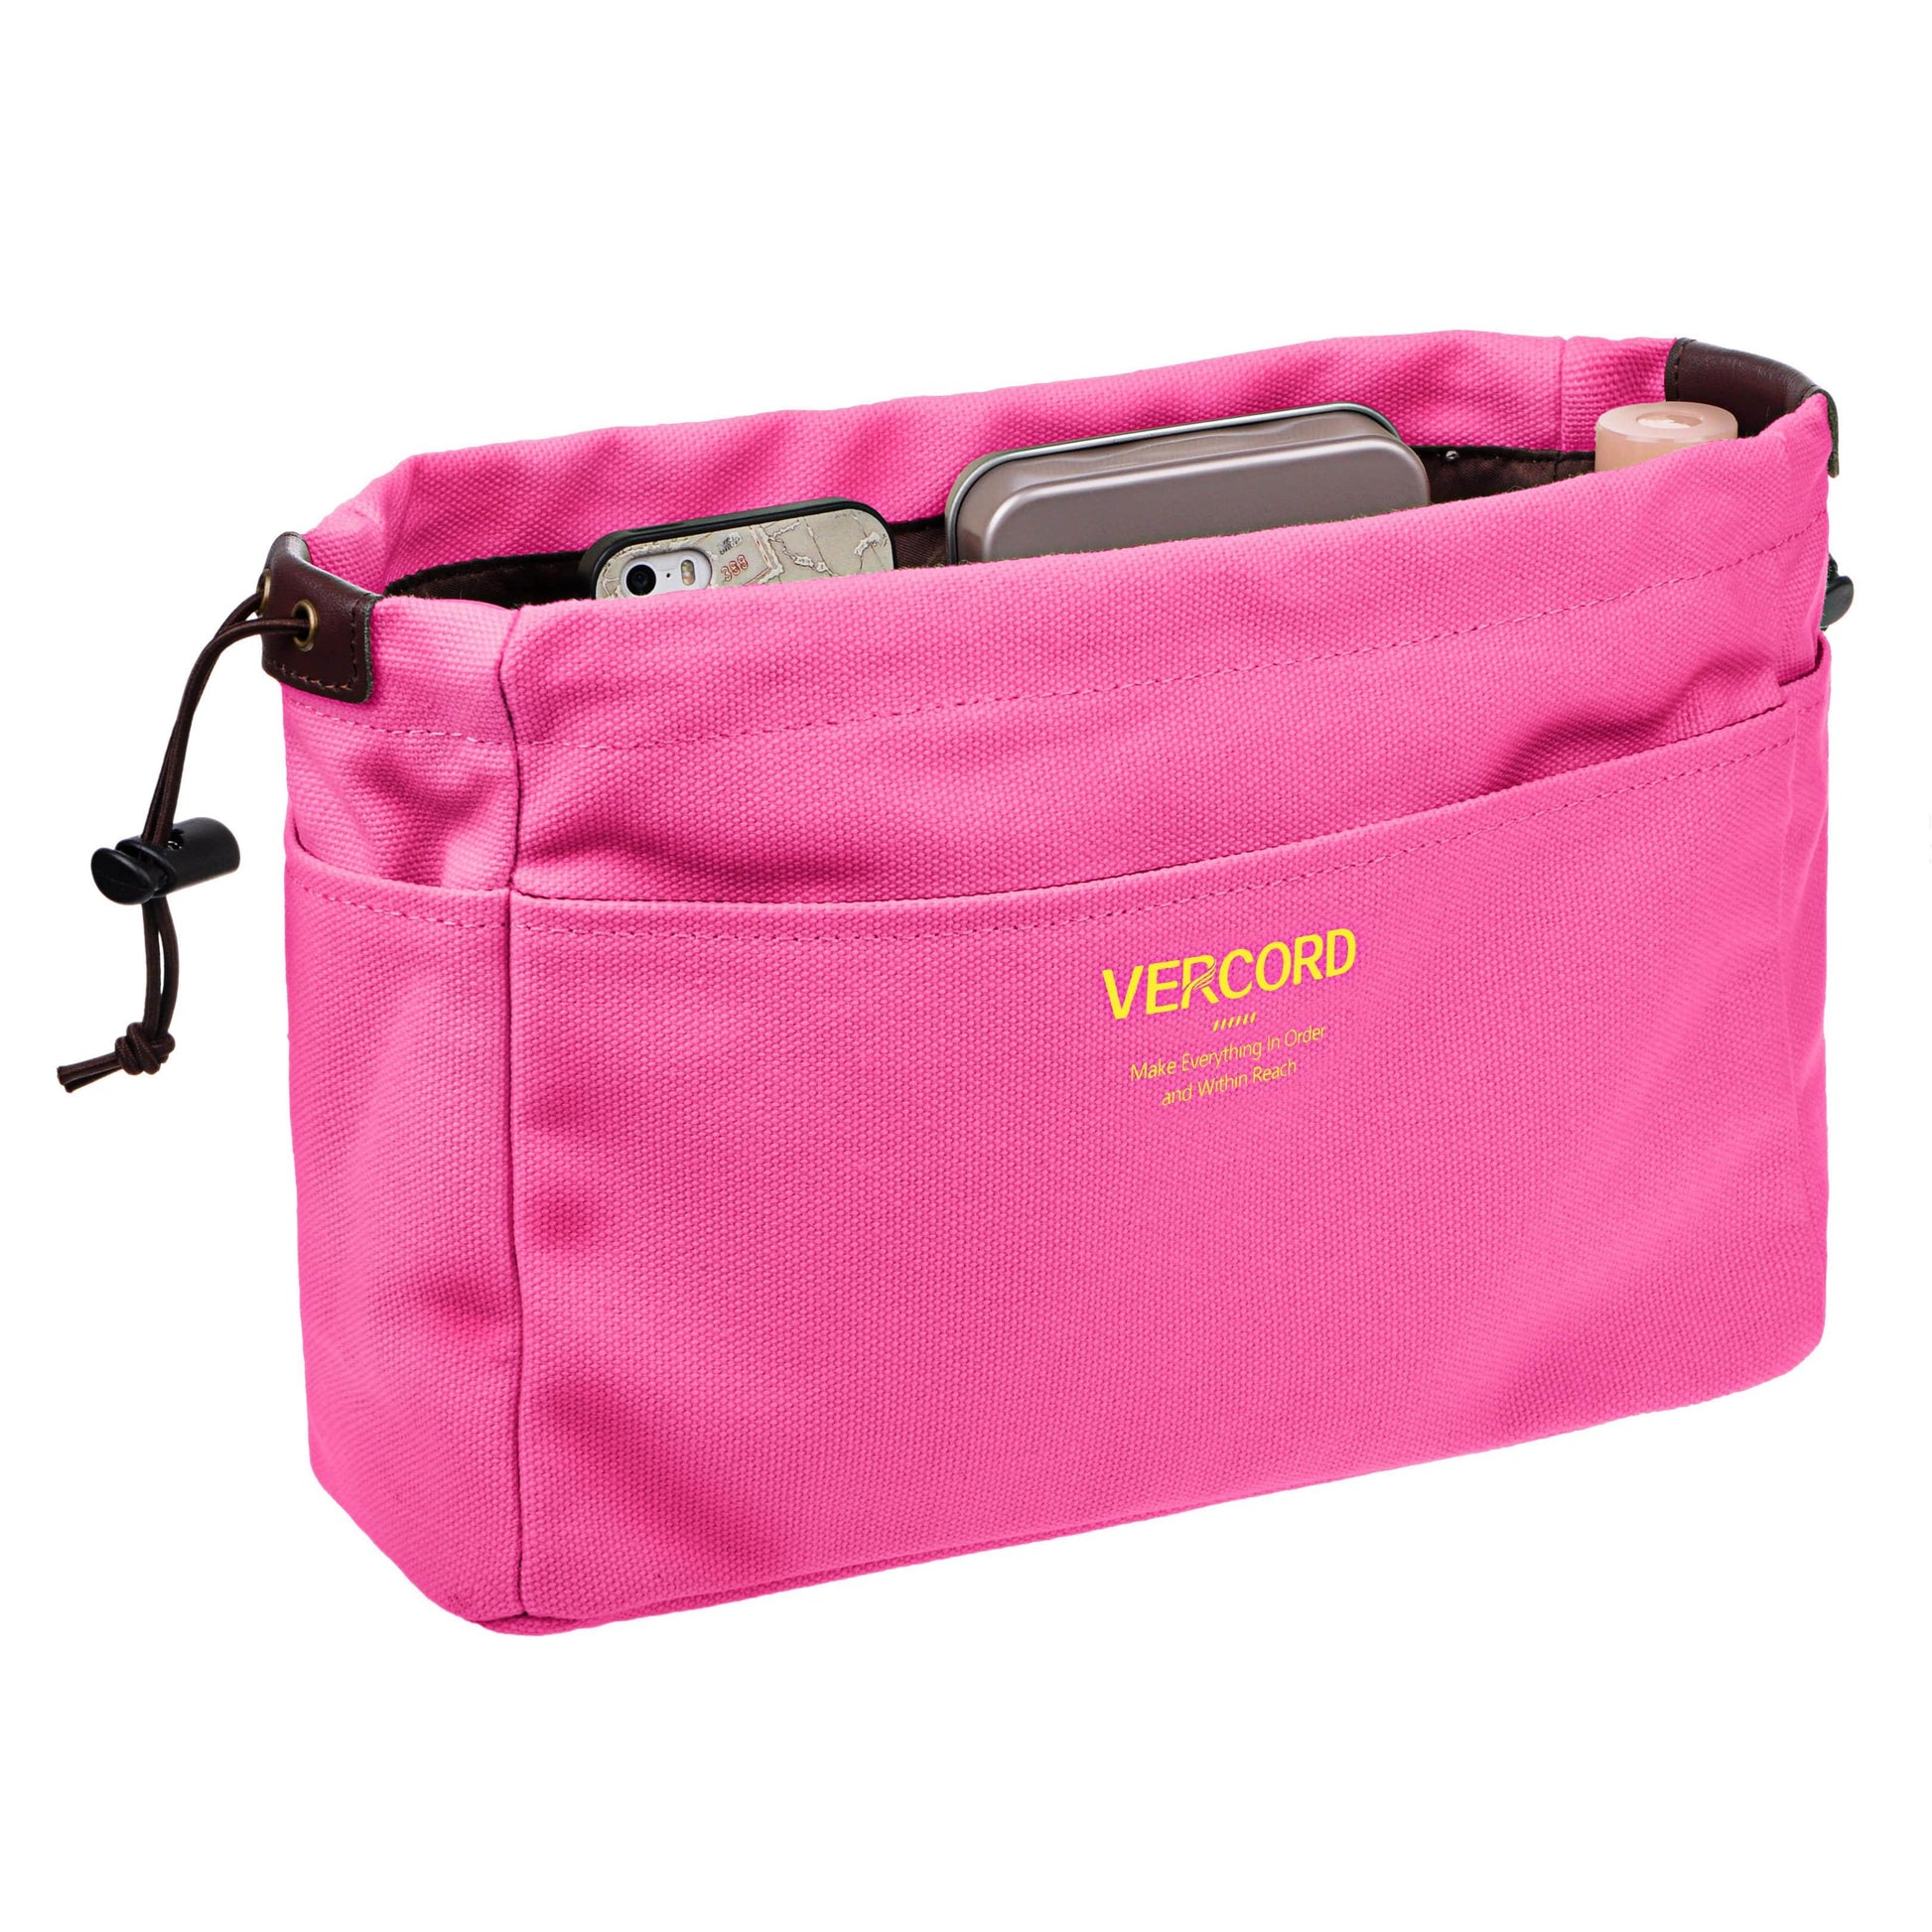 Vercode handbag purse organizer insert